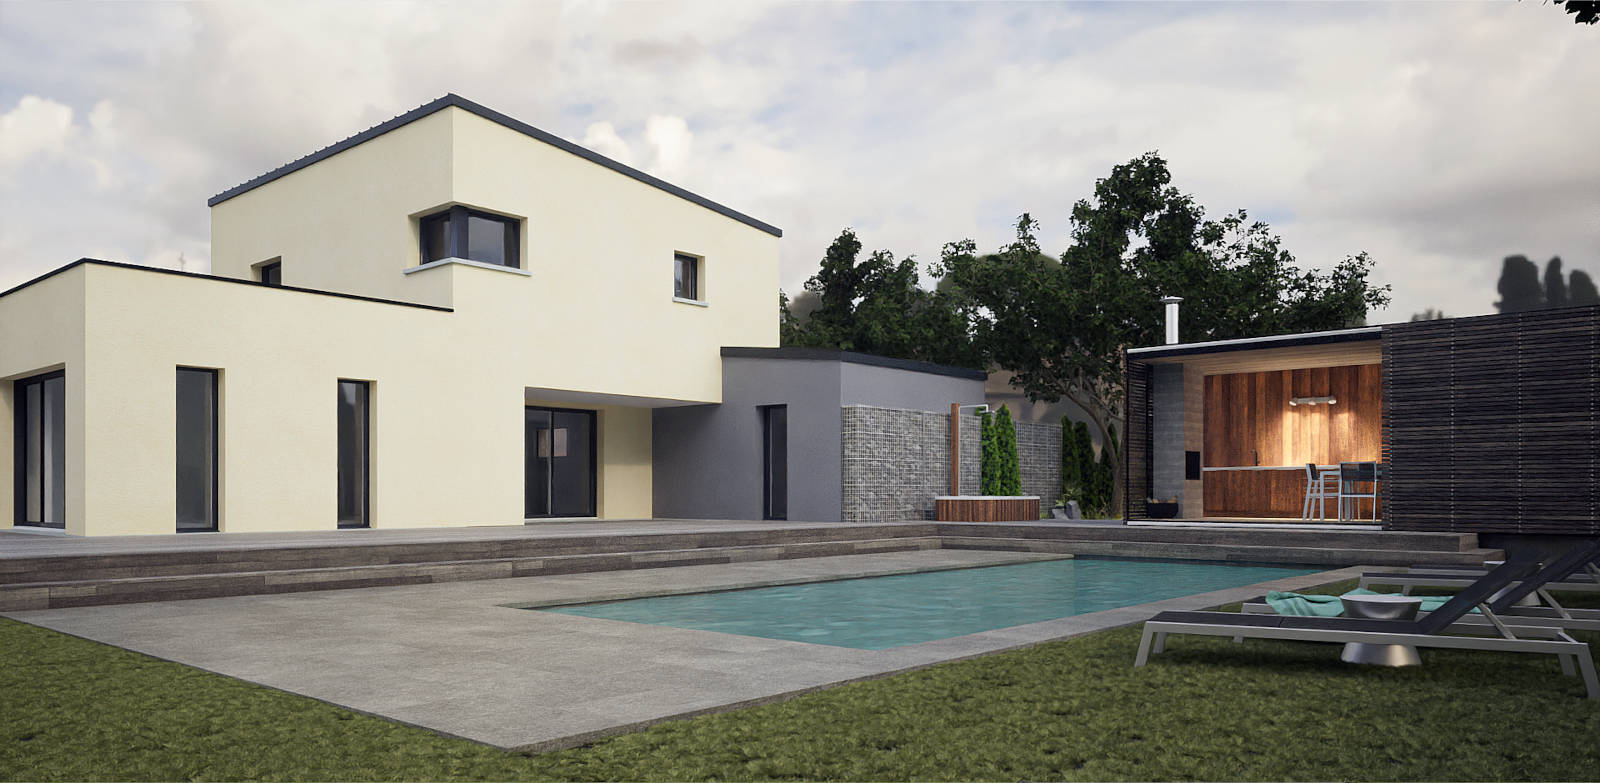 Maisons CARON - Maison moderne avec piscine à Irodouer (35)